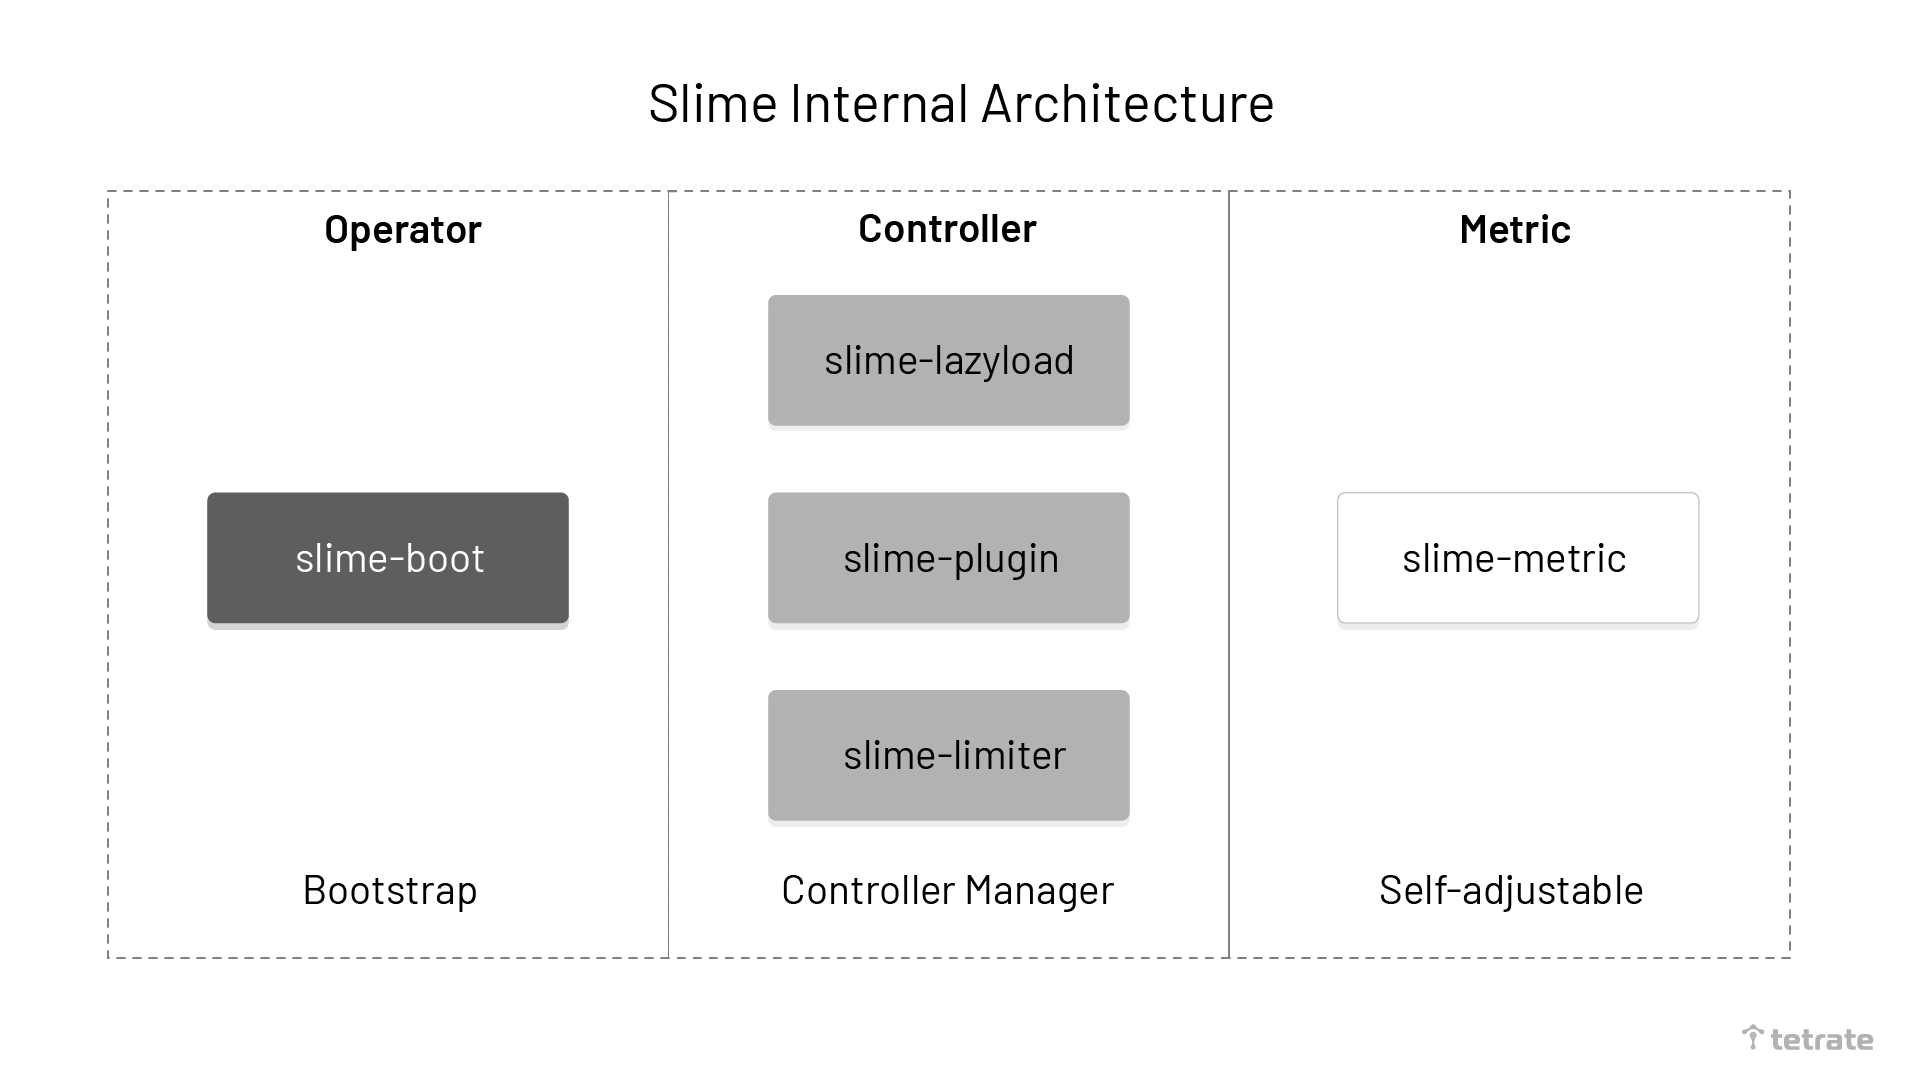 Slime Internal